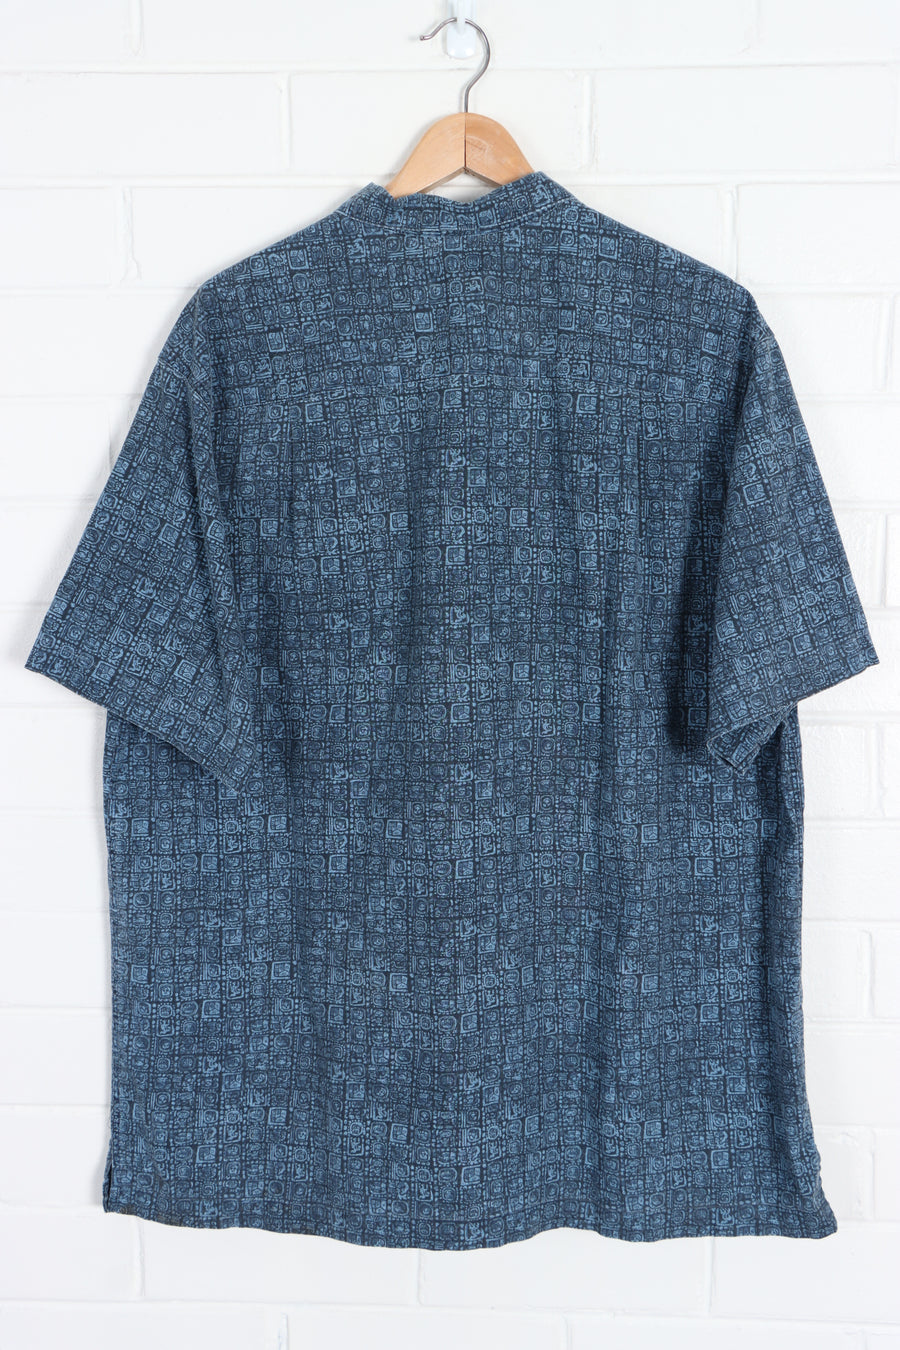 L.L. BEAN Blue Hawaiian Style Short Sleeve Shirt (XL) - Vintage Sole Melbourne